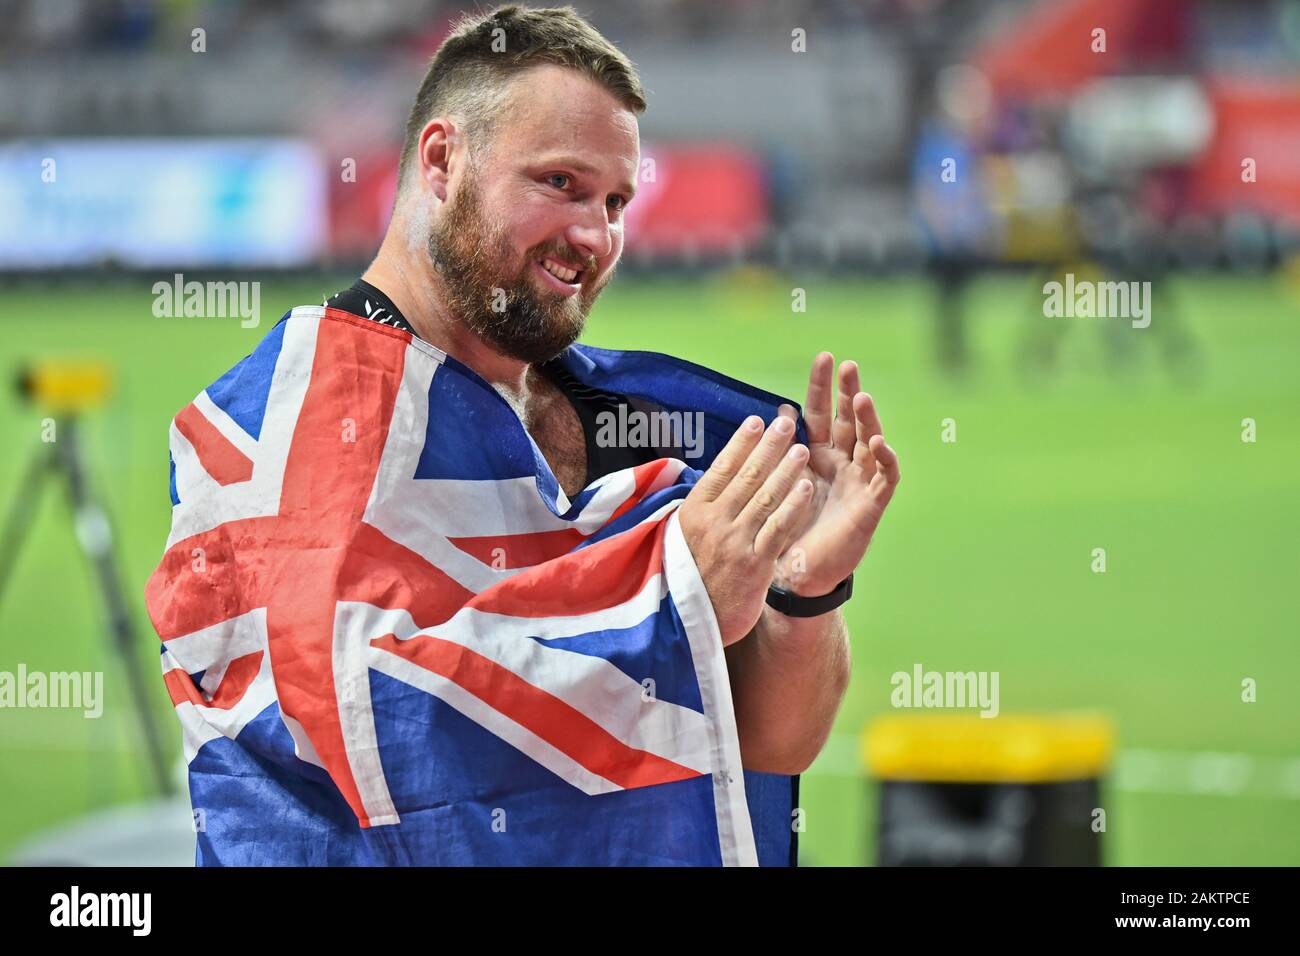 Tomas Walsh (Neuseeland). Kugelstoßen Männer Bronze. IAAF Leichtathletik WM, Doha 2019 Stockfoto